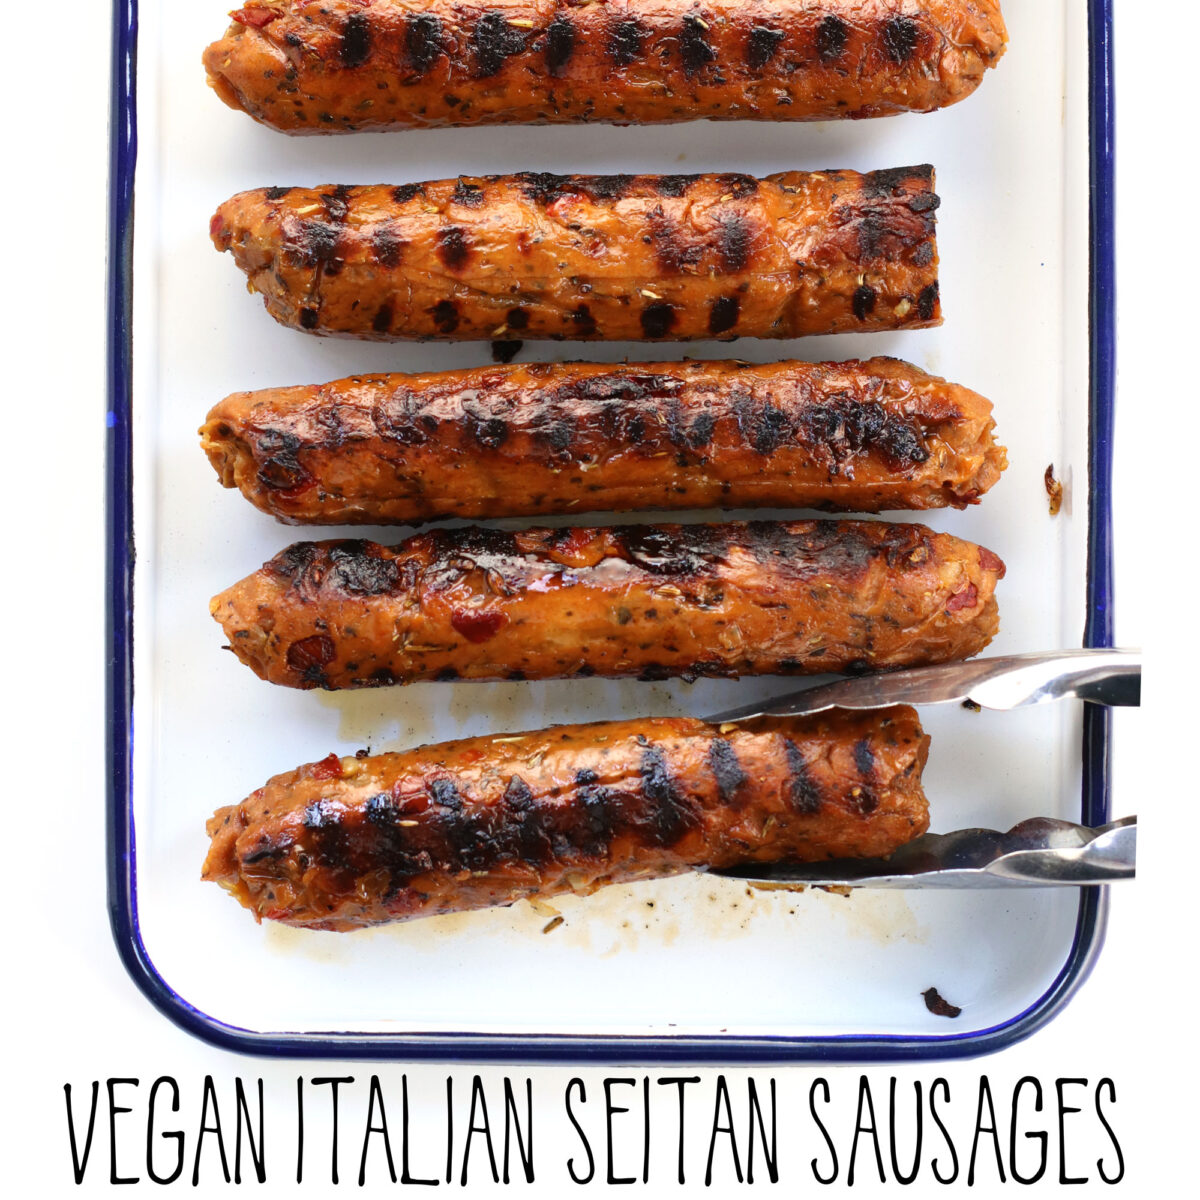 Vegan Italian Seitan Sausages